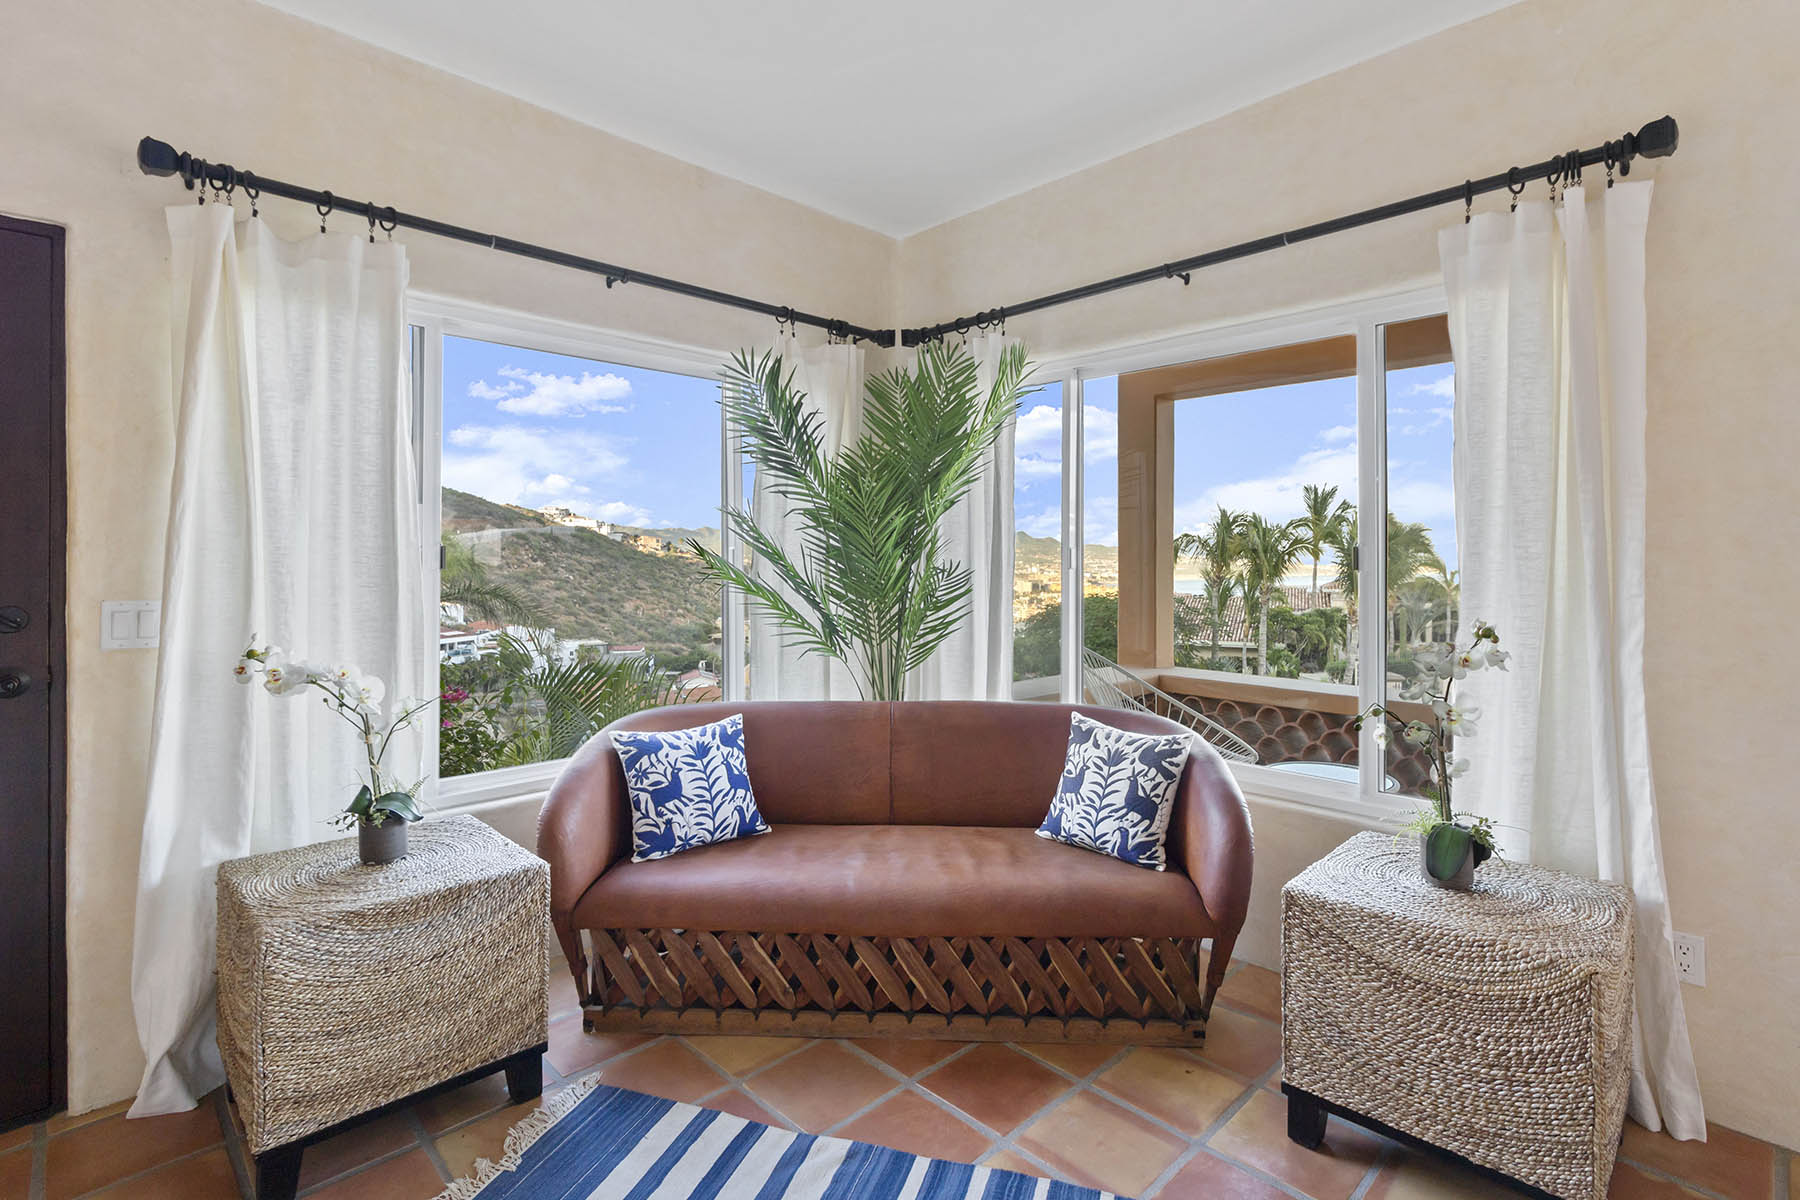 Casita of a Luxury Resort-Style Villa in Cabo San Lucas, Mexico